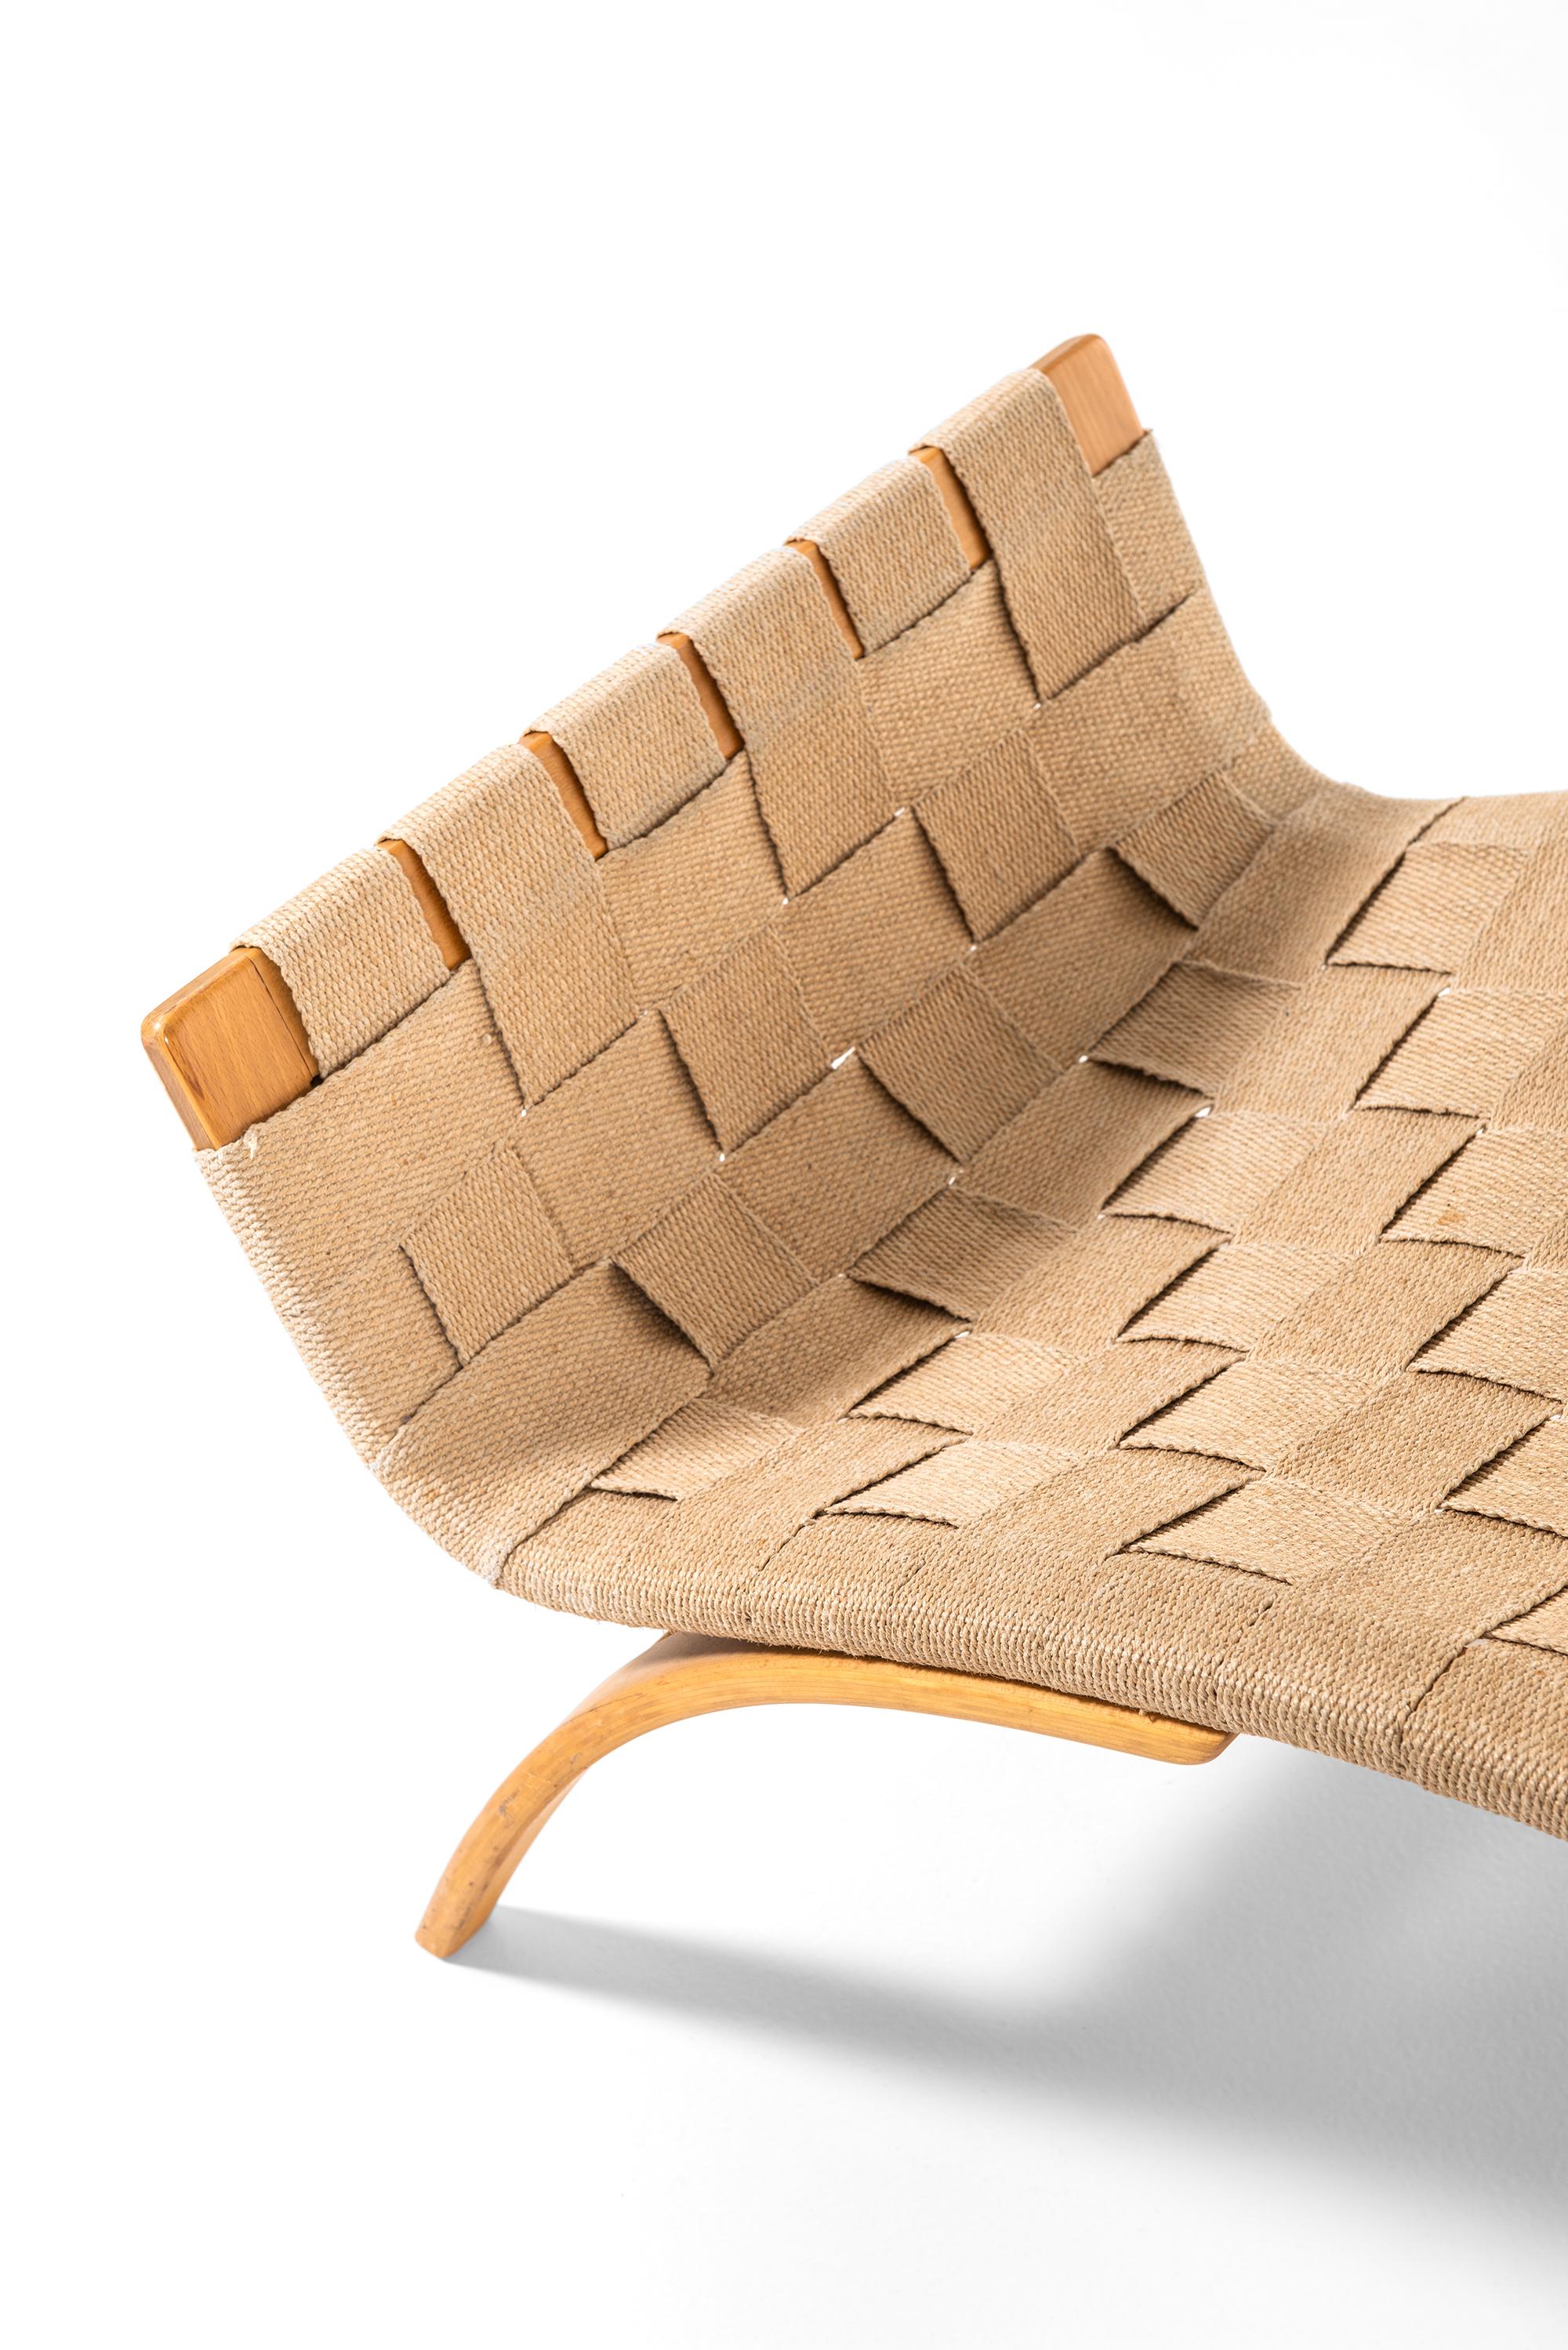 Swedish Bruno Mathsson Easy Chairs with Stools Model Pernilla Produced by Karl Mathsson